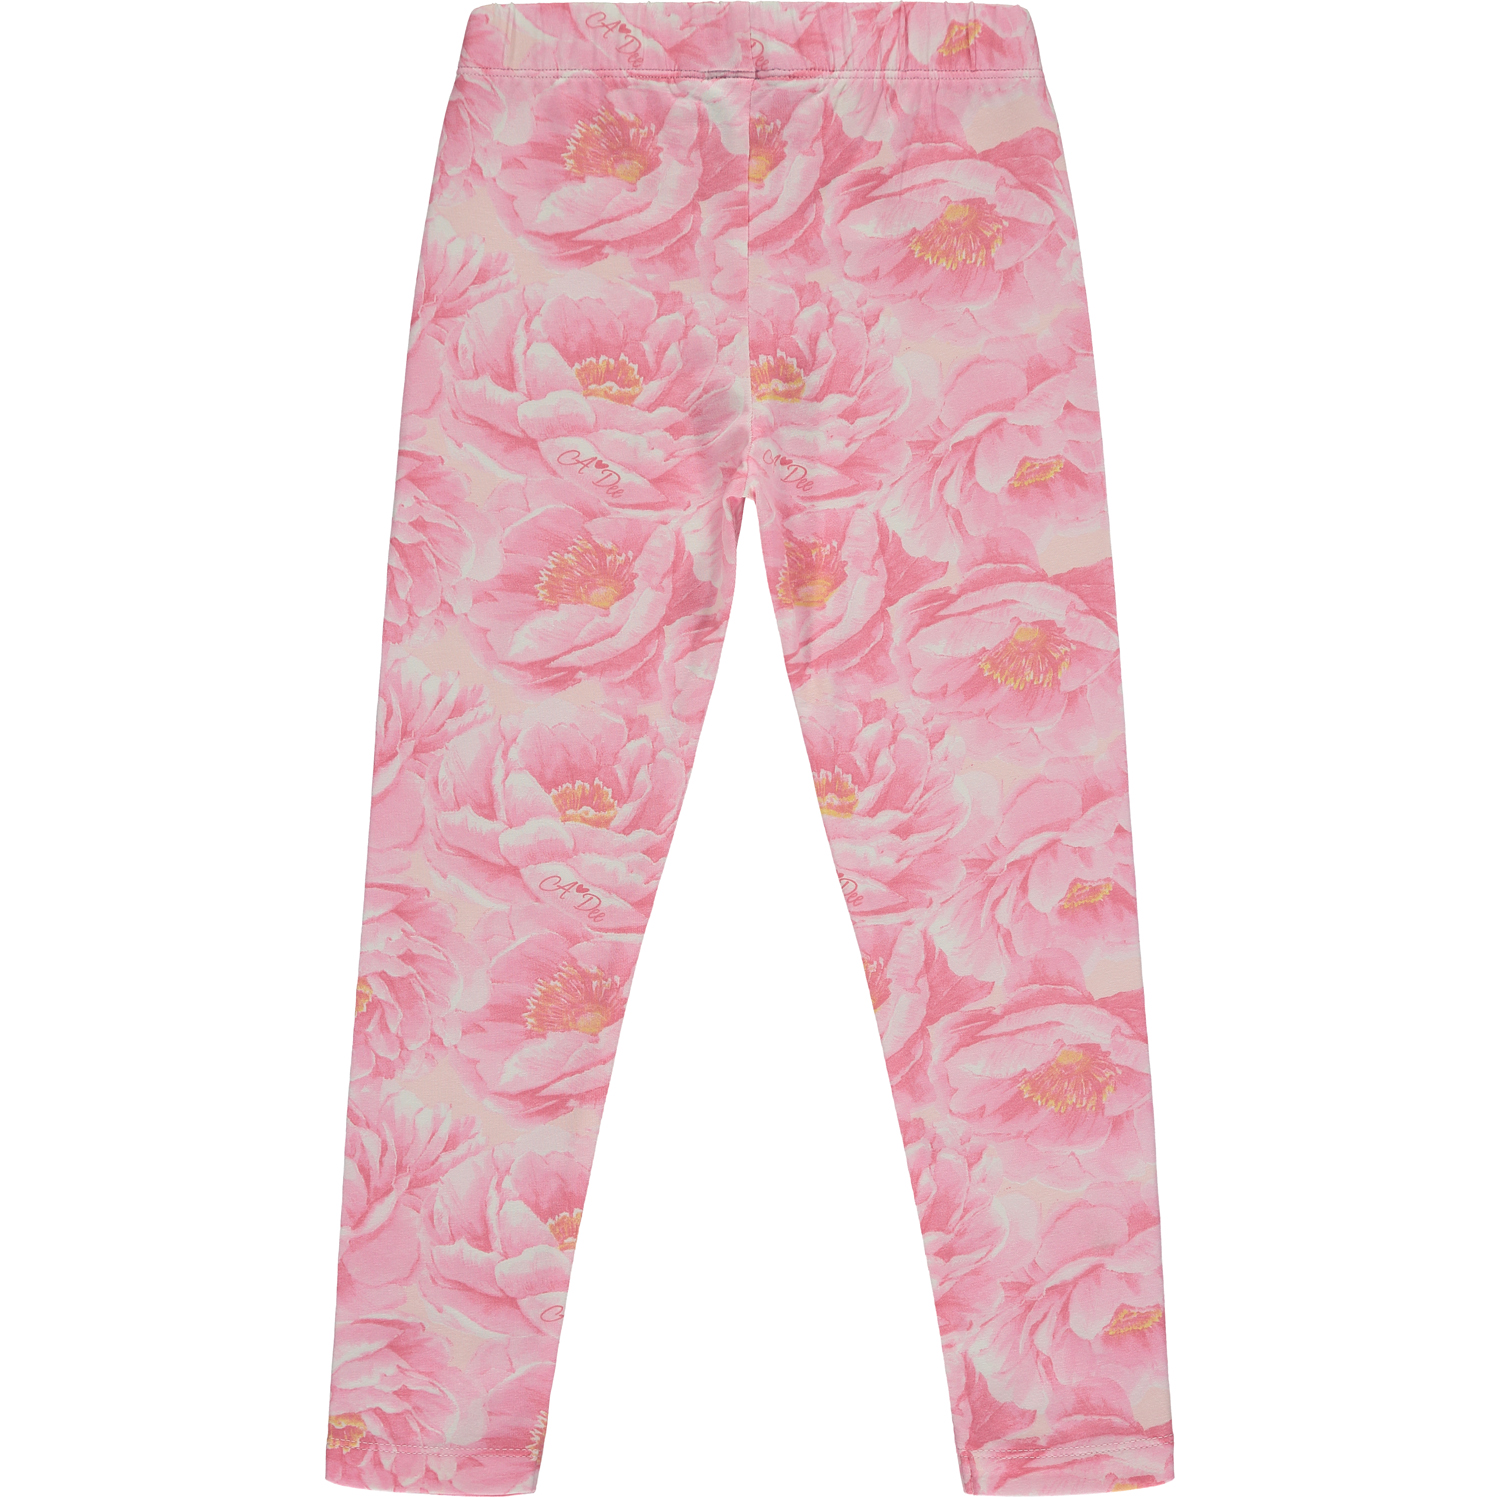 A’dee Addison Peony Dreams compleet roze leggingset met print legging achter